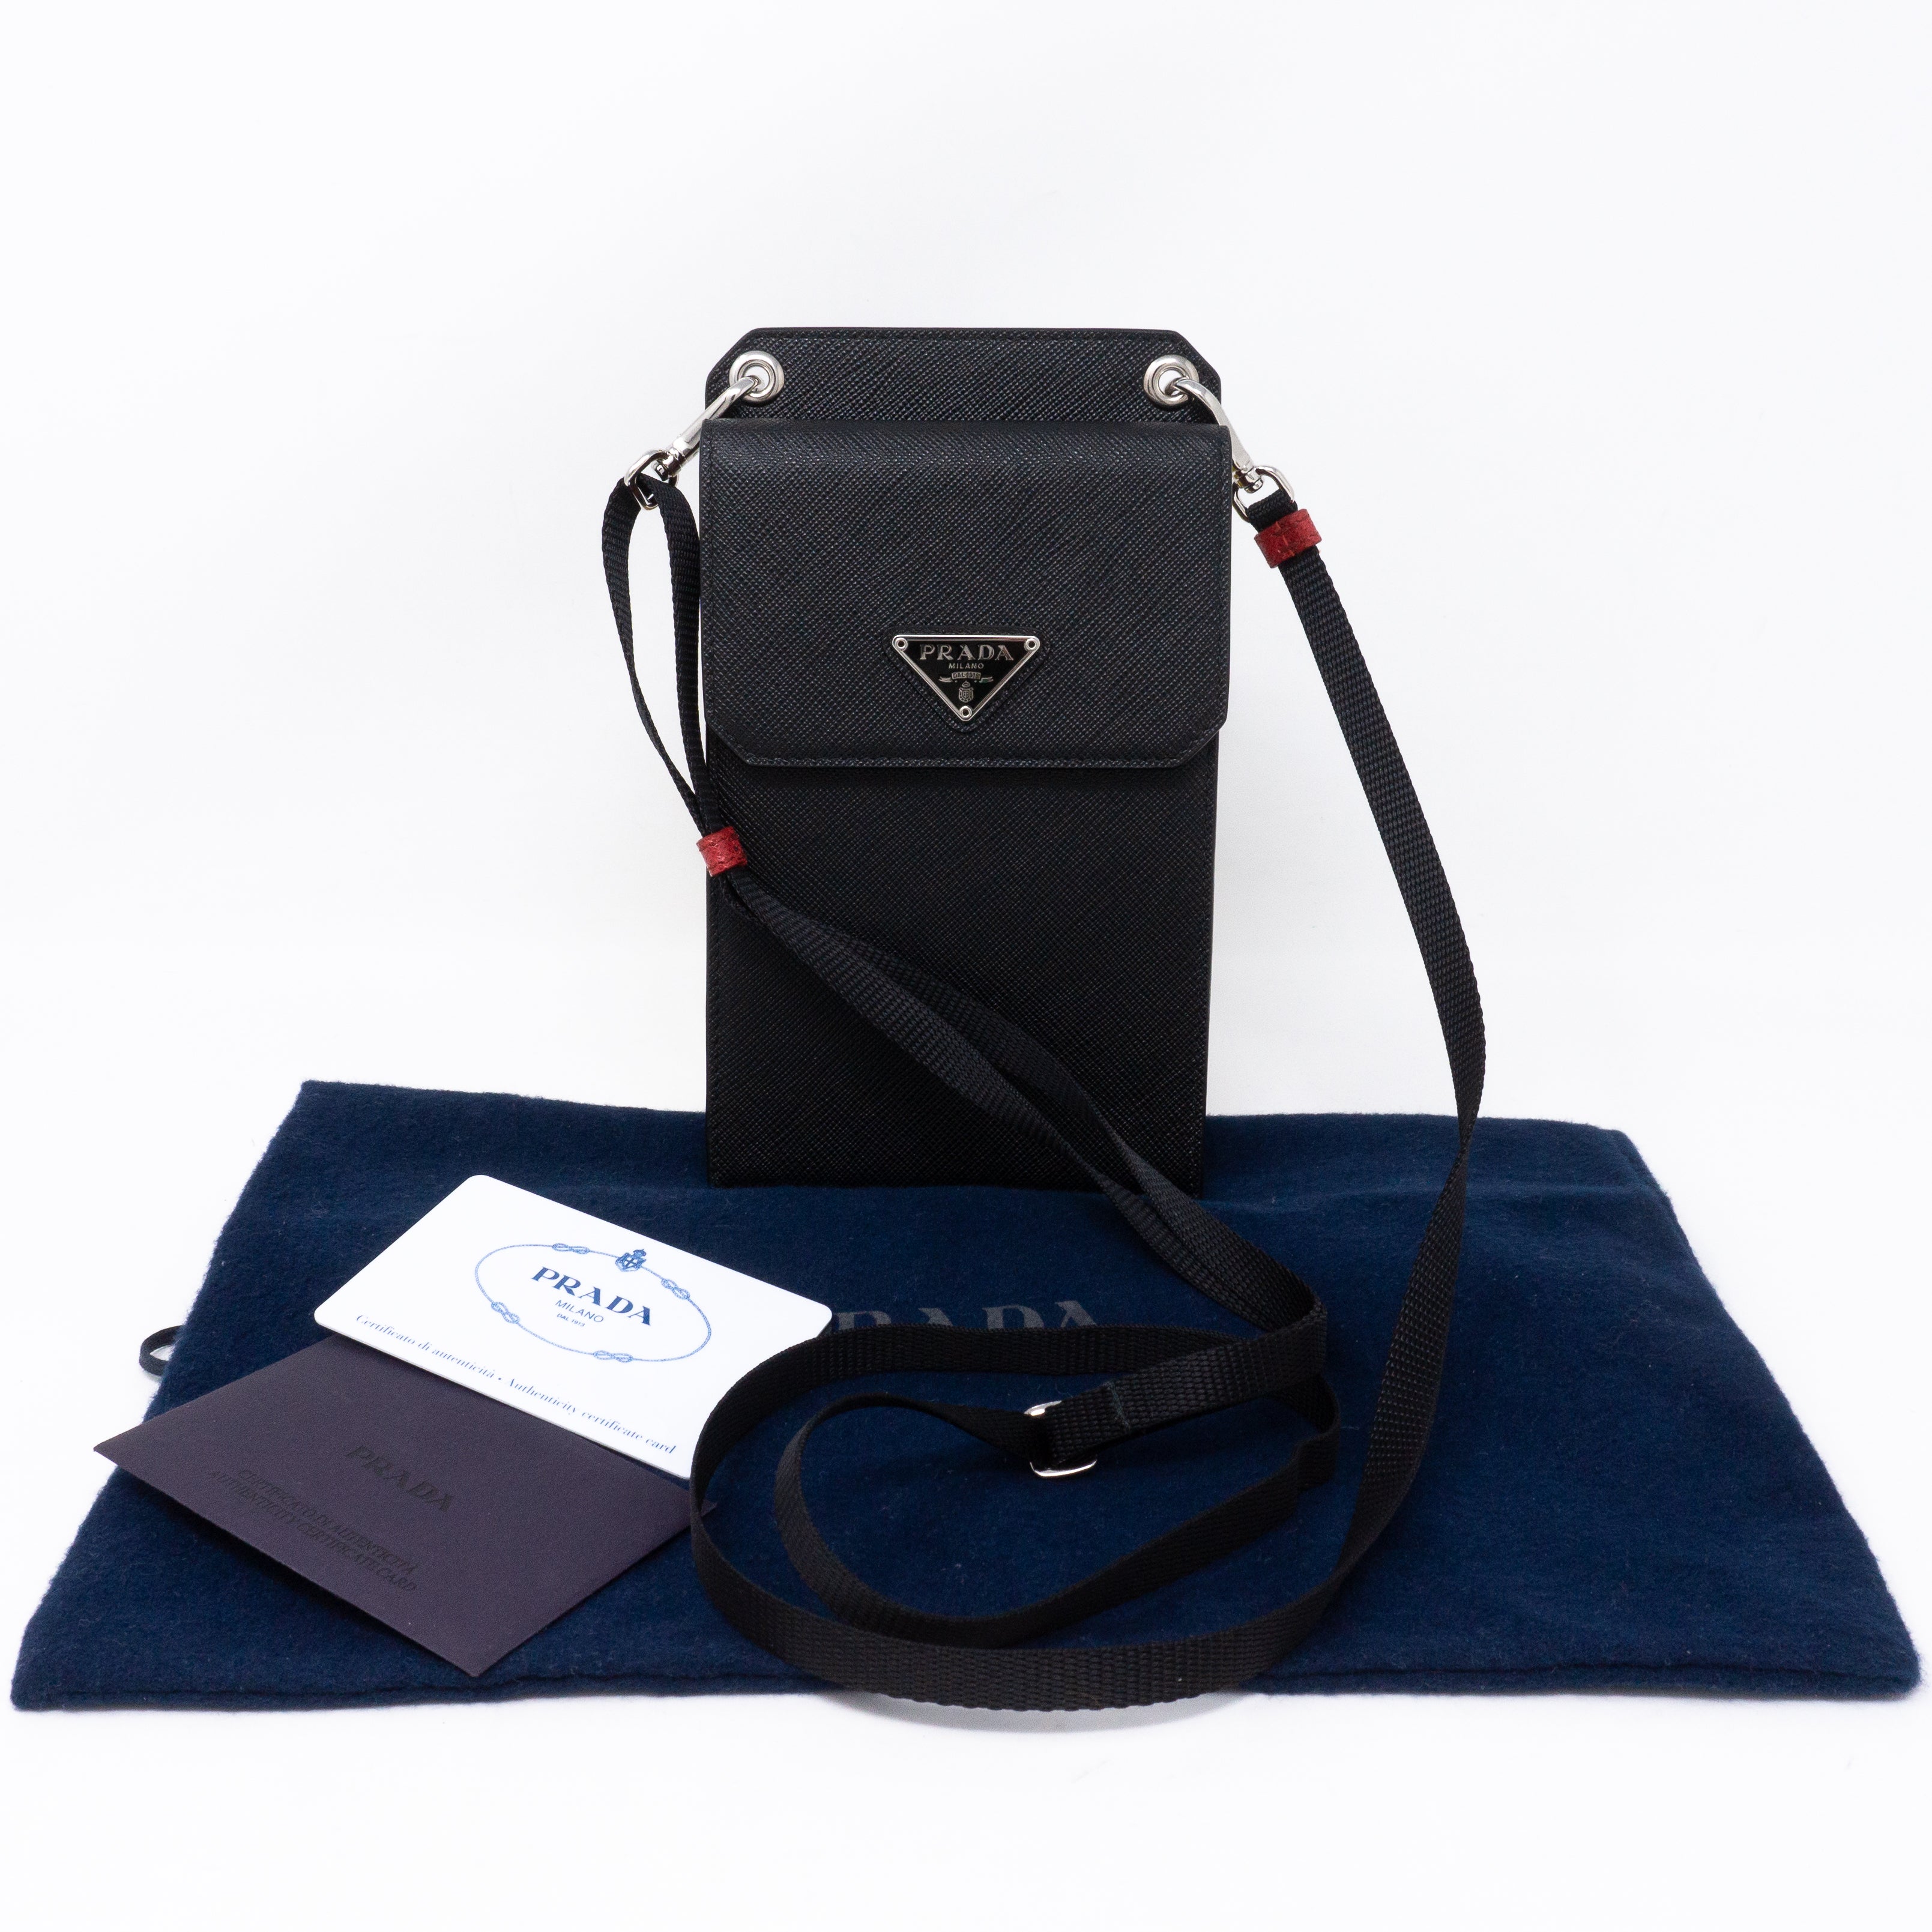 Prada Saffiano Leather Phone Case With Webbing Lanyard in Black